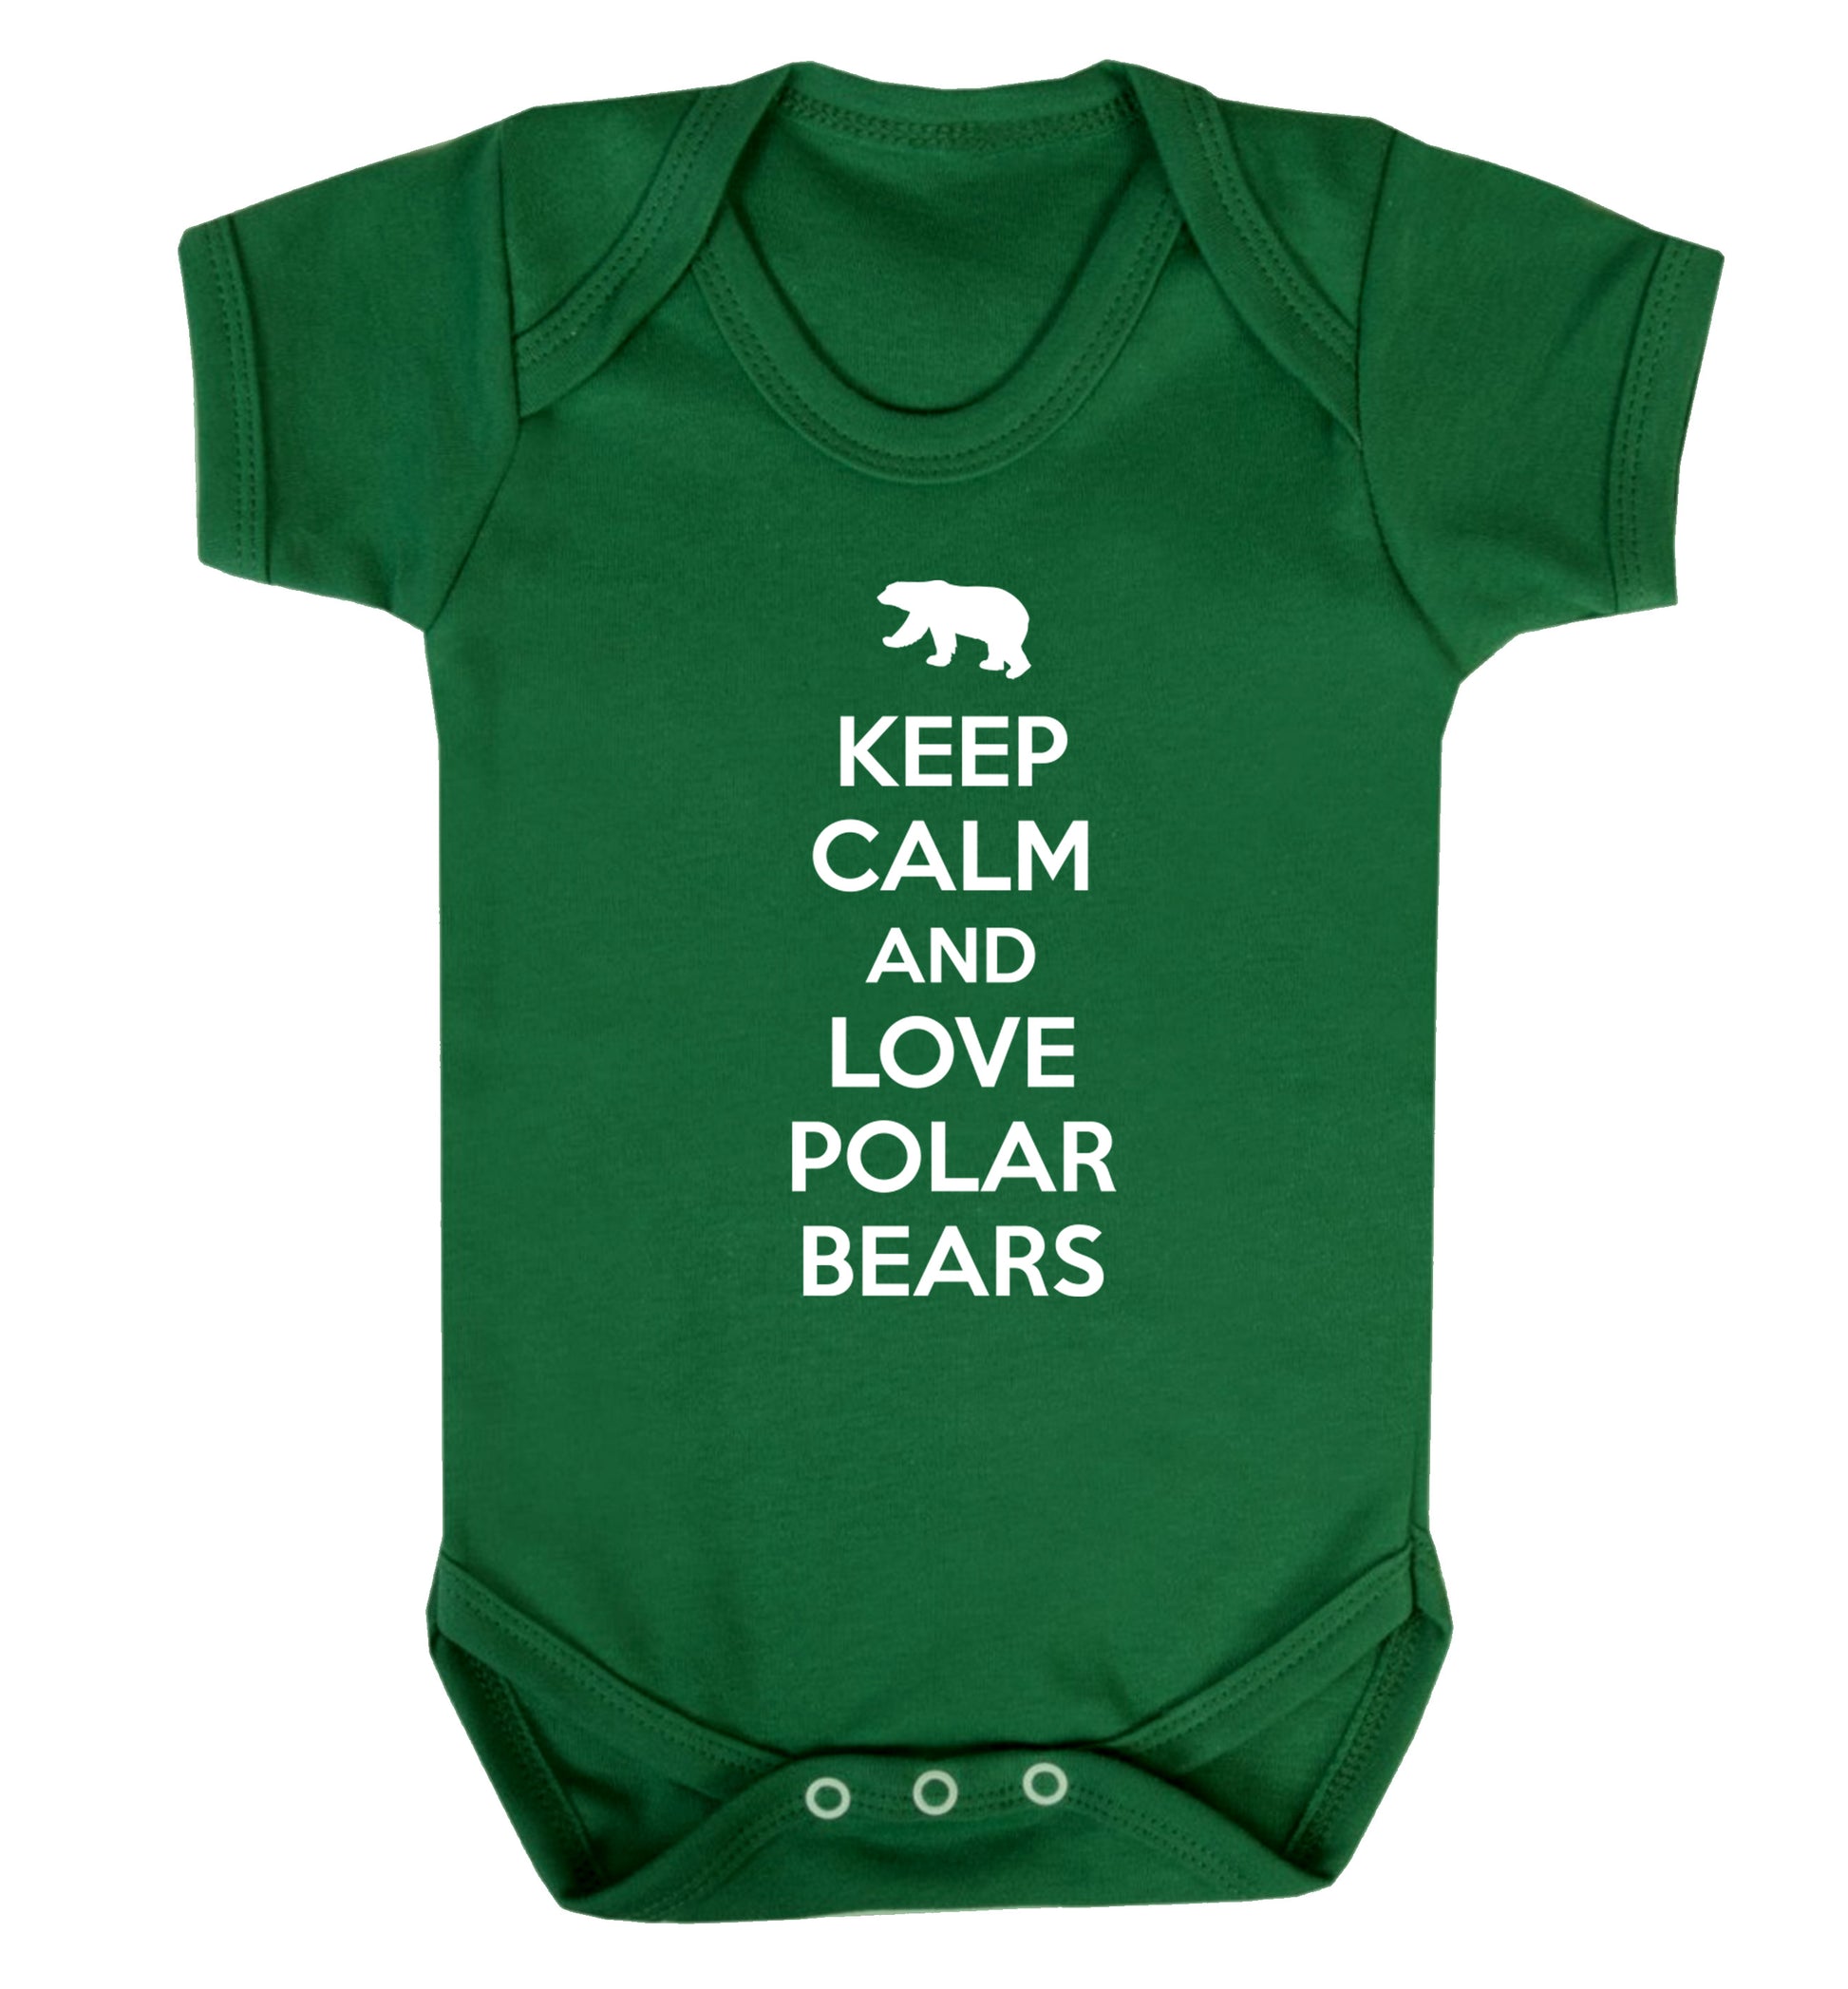 Keep calm and love polar bears Baby Vest green 18-24 months